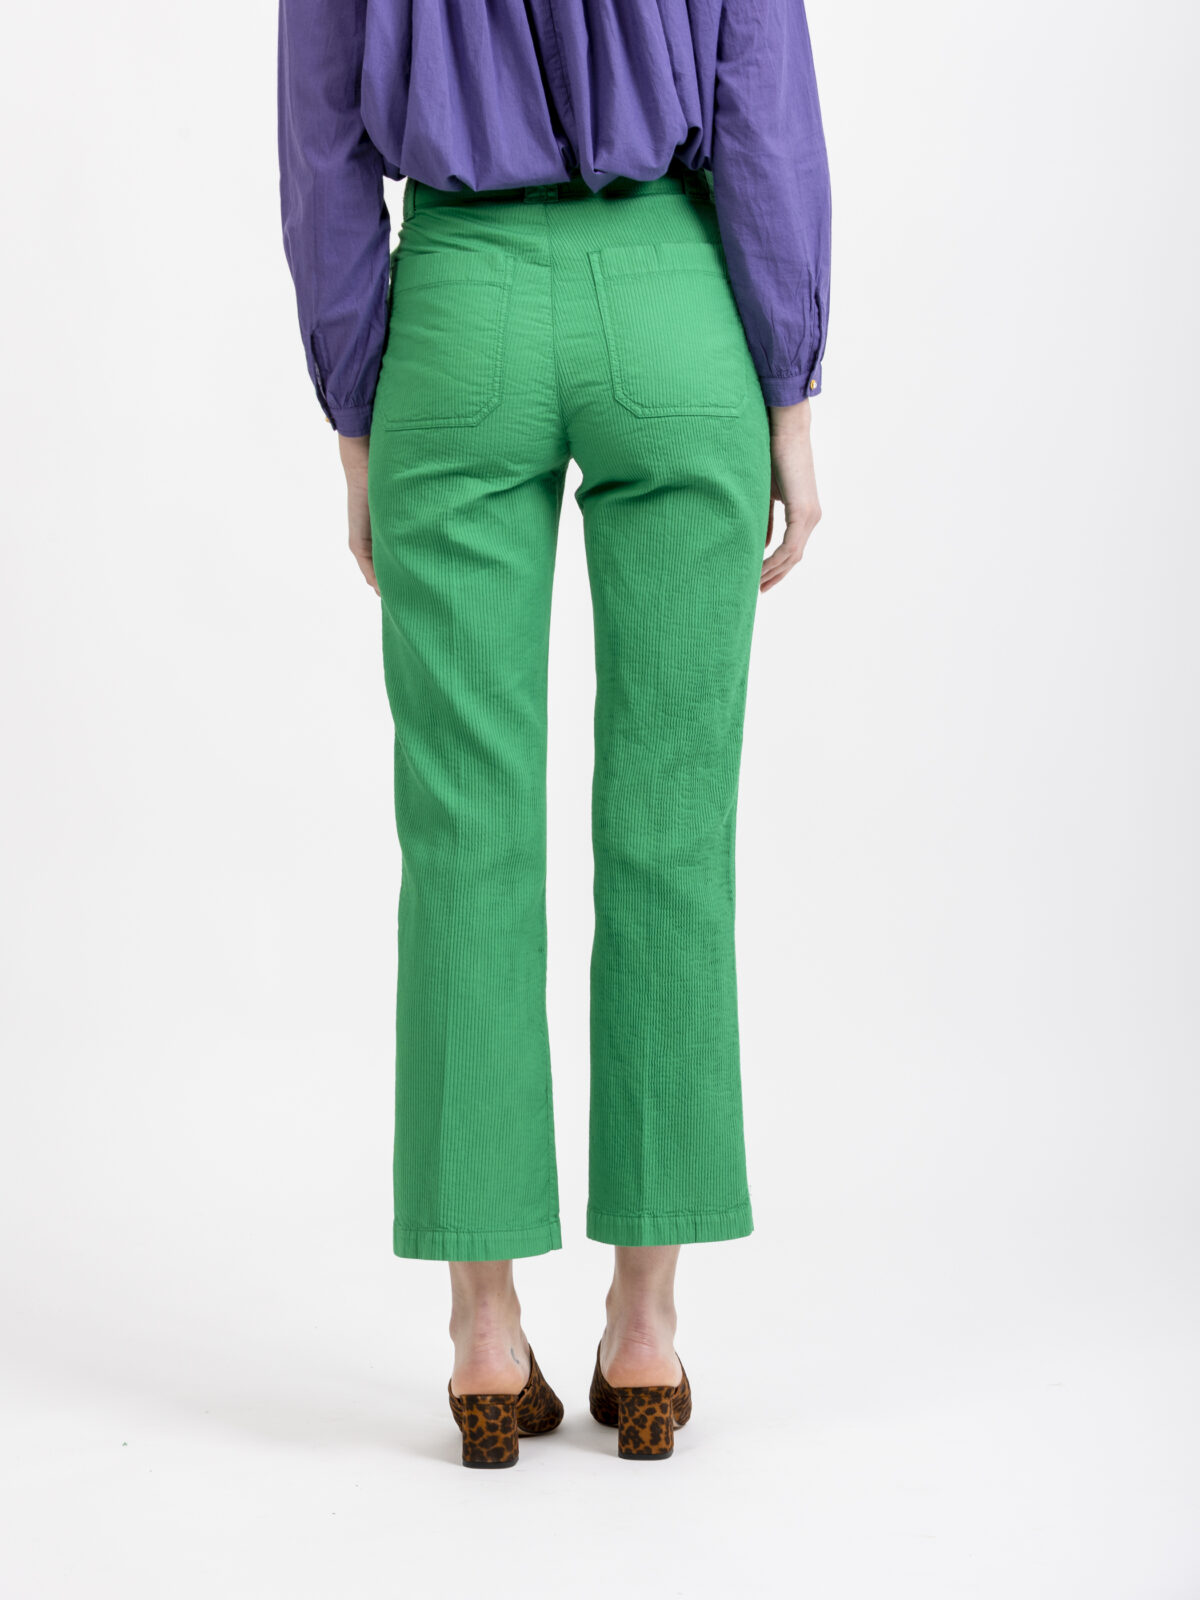 rico-green-soft-cotton-trousers-cargo-labdip-matchboxathens